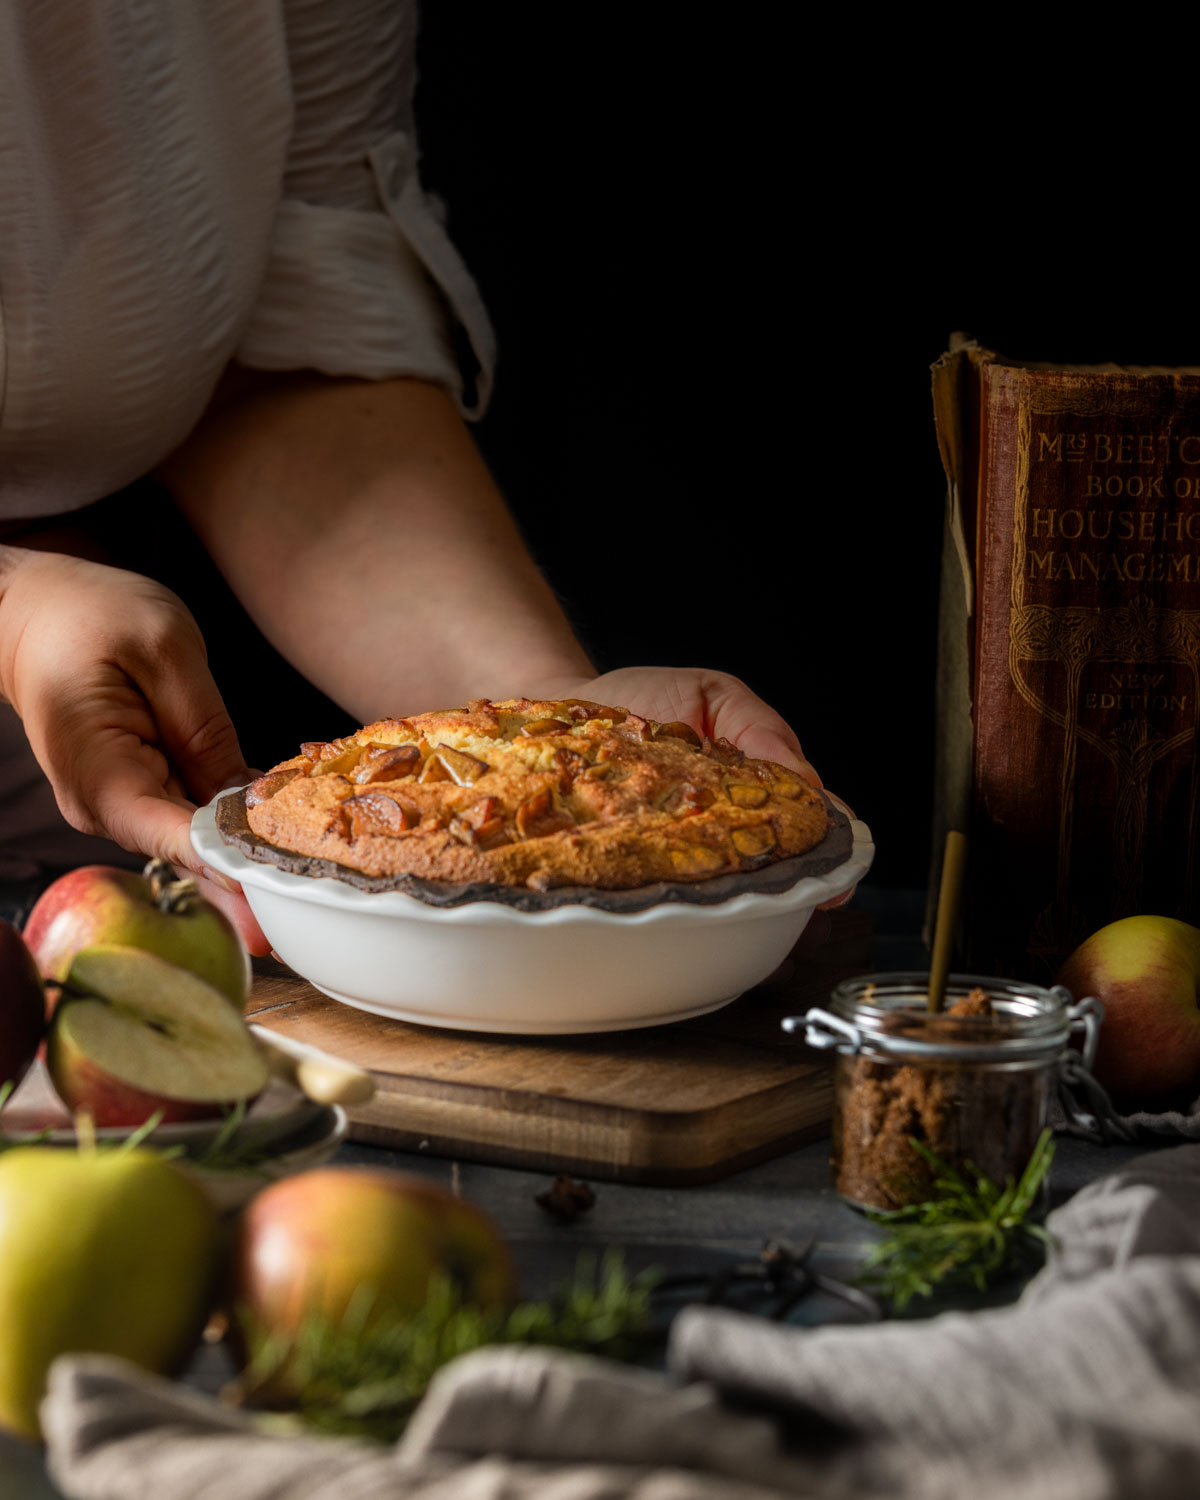 Cinnamon Apple Frangipane Pie - Lou Carruthers Food Photographer